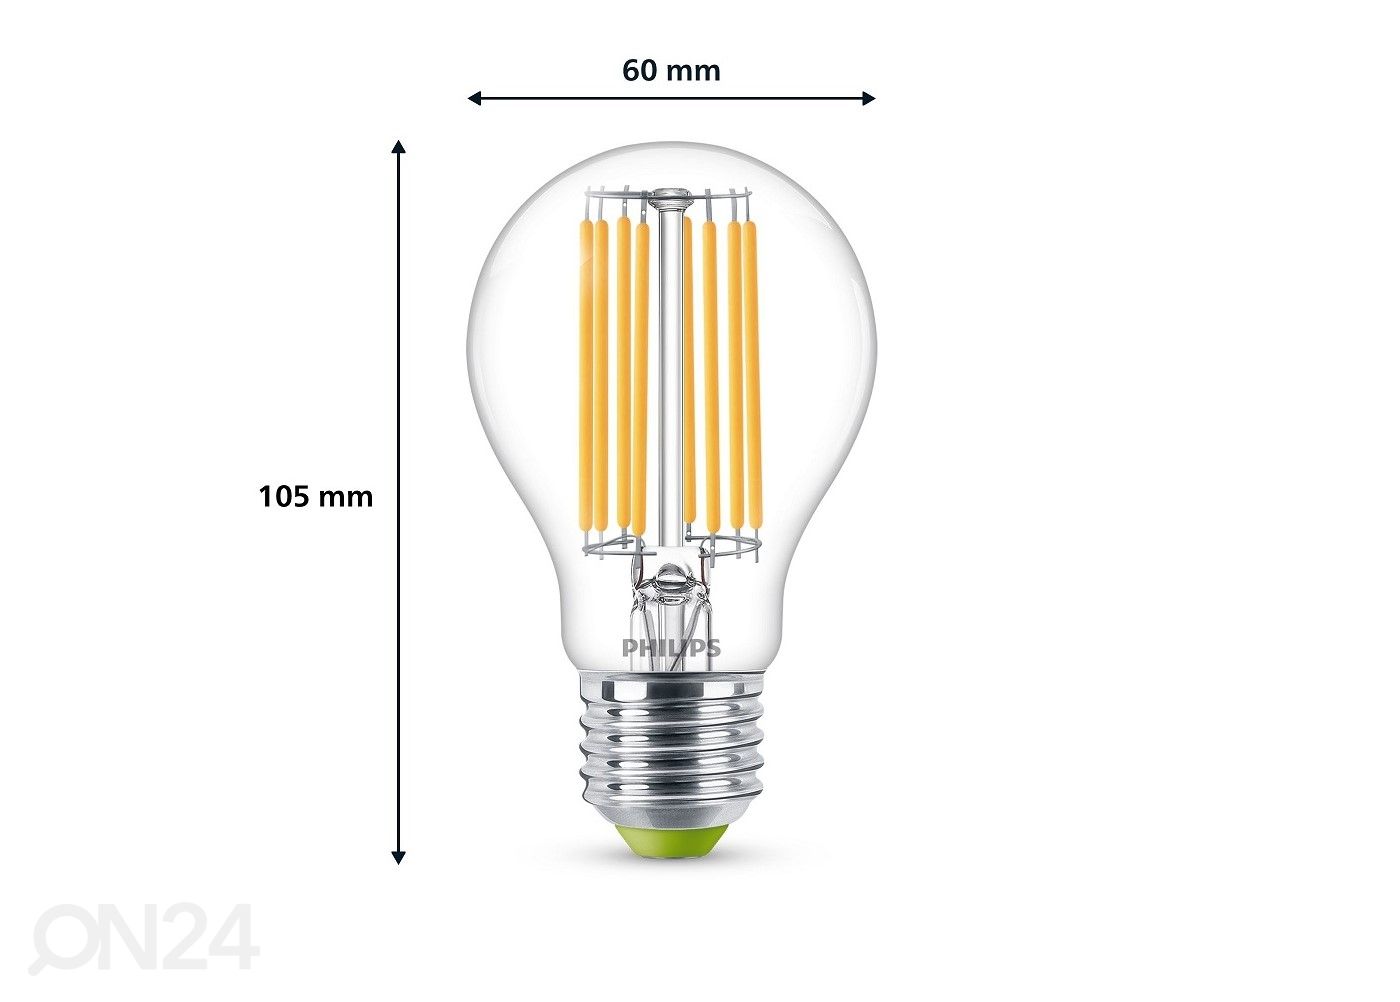 Philips Ultra LED filament (60W) 4W 840lm A60 E27 3000K увеличить размеры